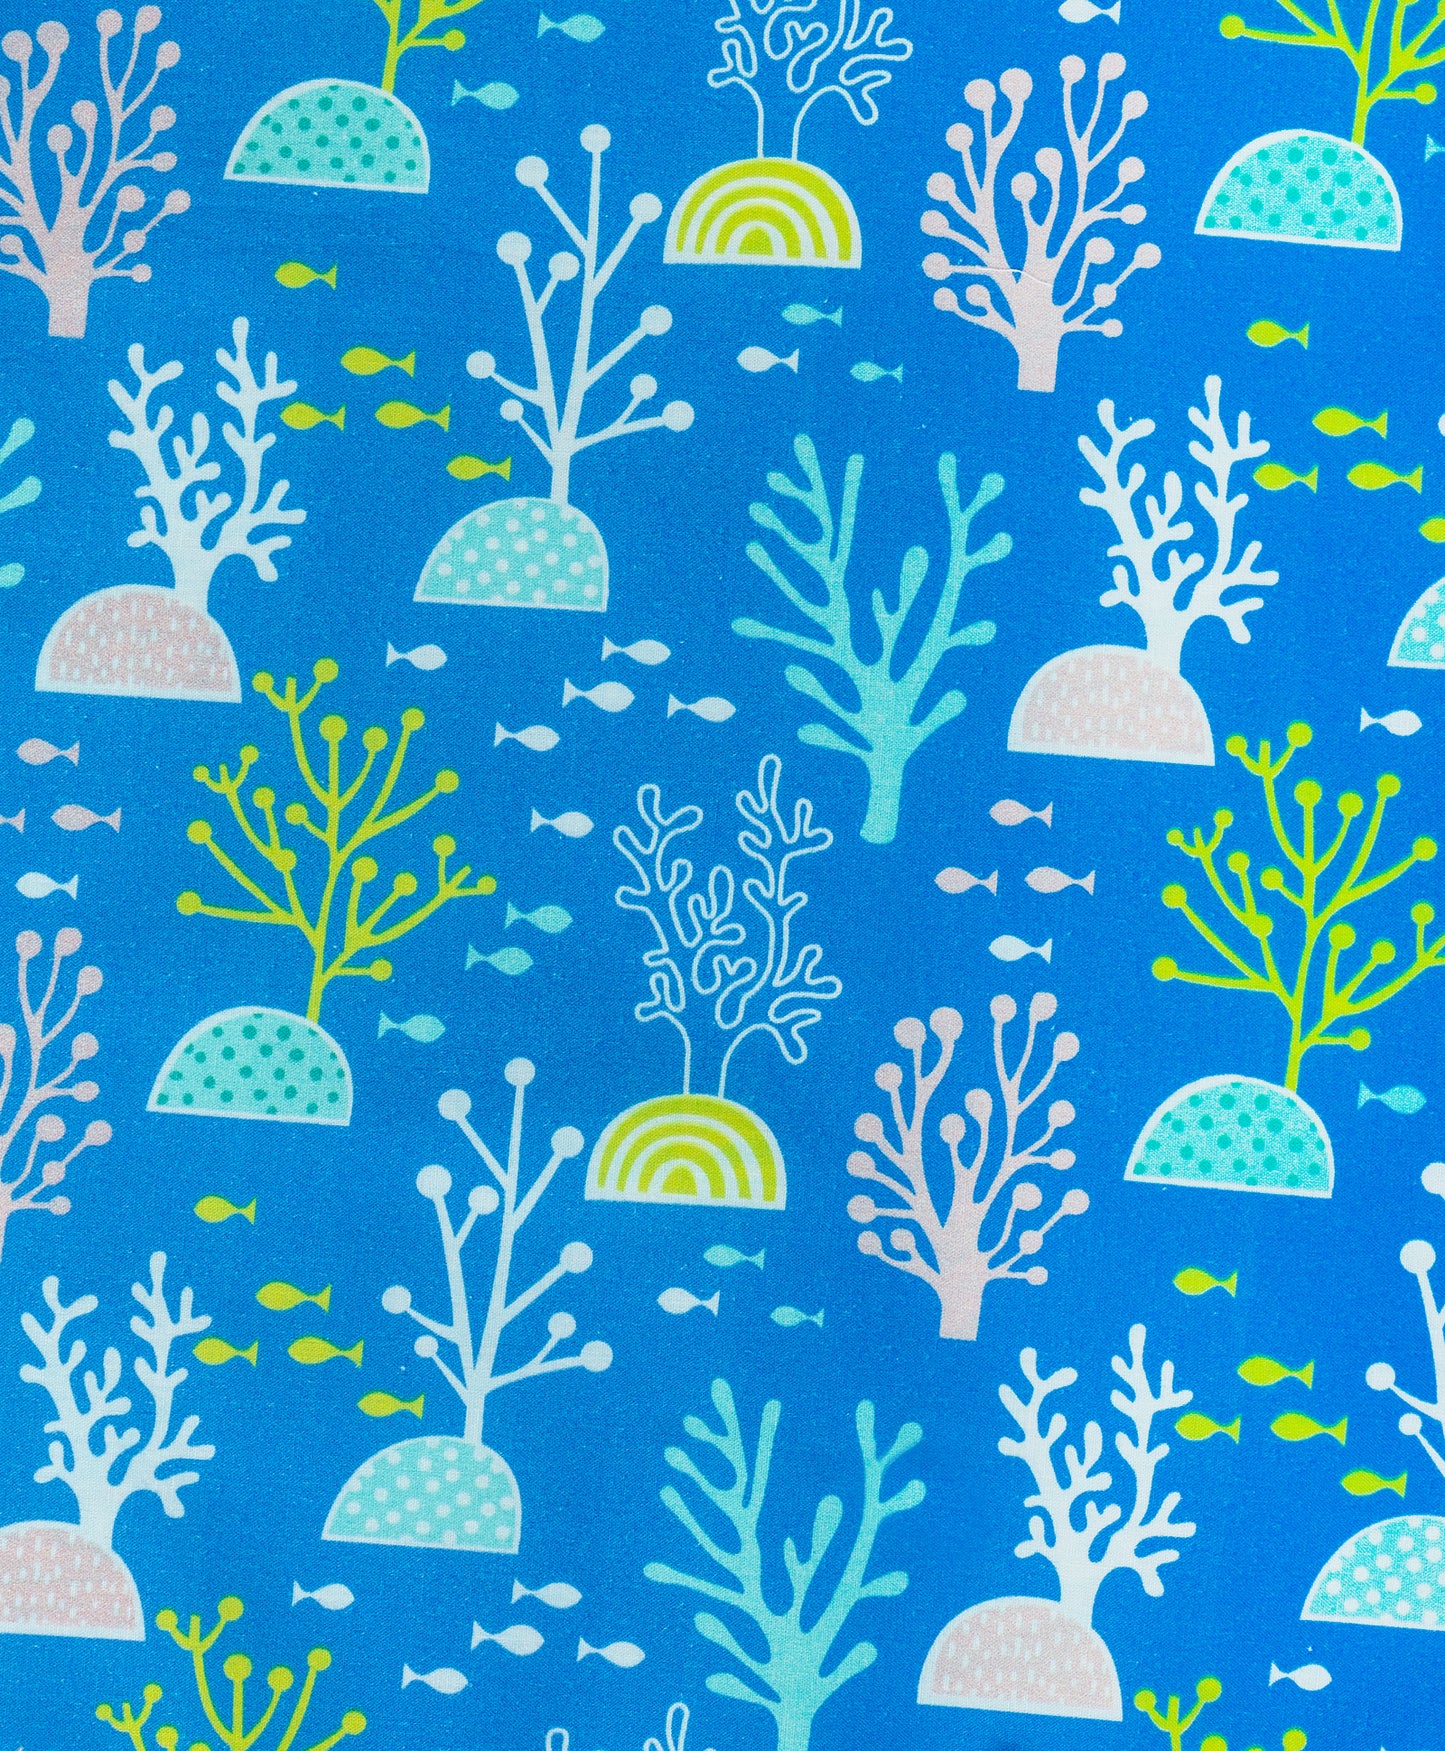 sea life print cot set with blue sea plant side print